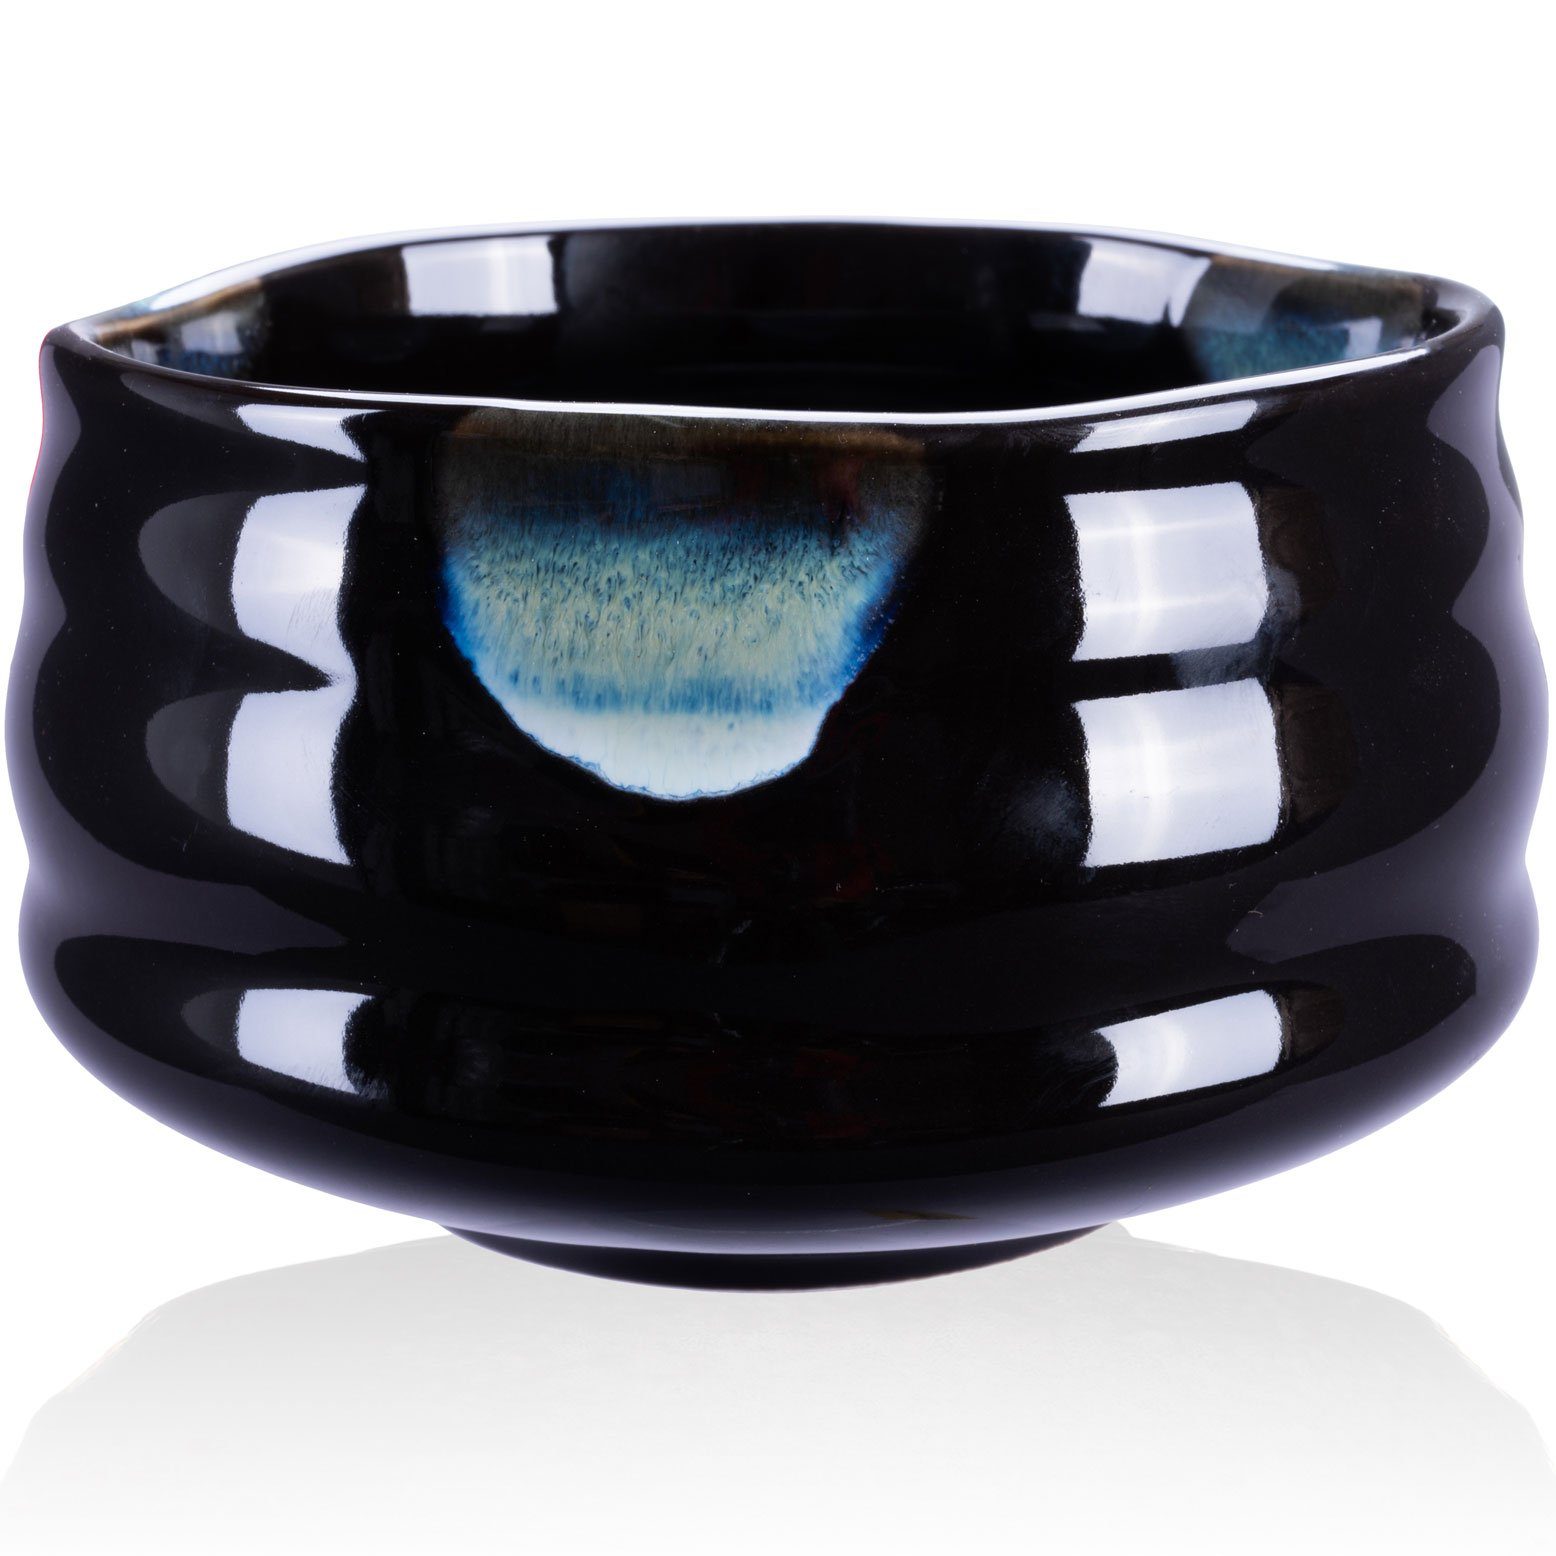 "Kuro" für ml, Goodwei Matcha-Schale Teeschale Keramik 430 Teezeremonie,